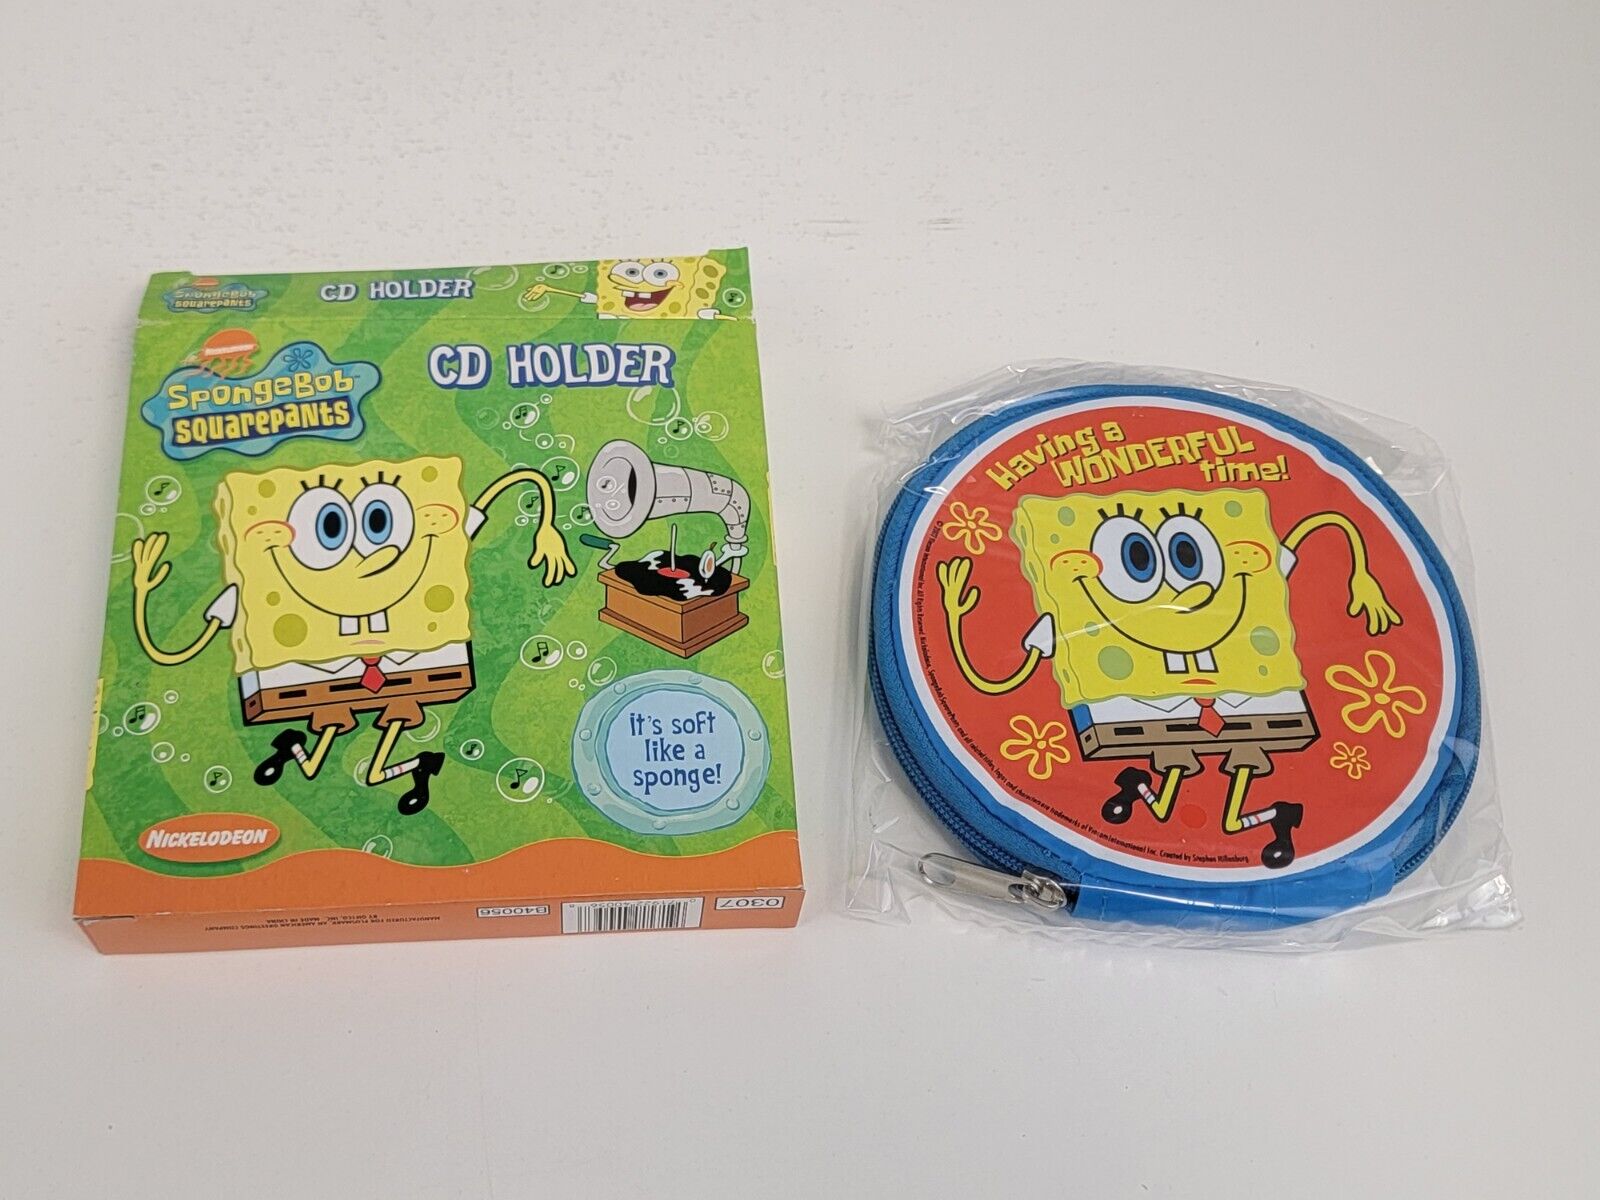 NEW - Vintage SpongeBob SquarePants Soft CD Case \